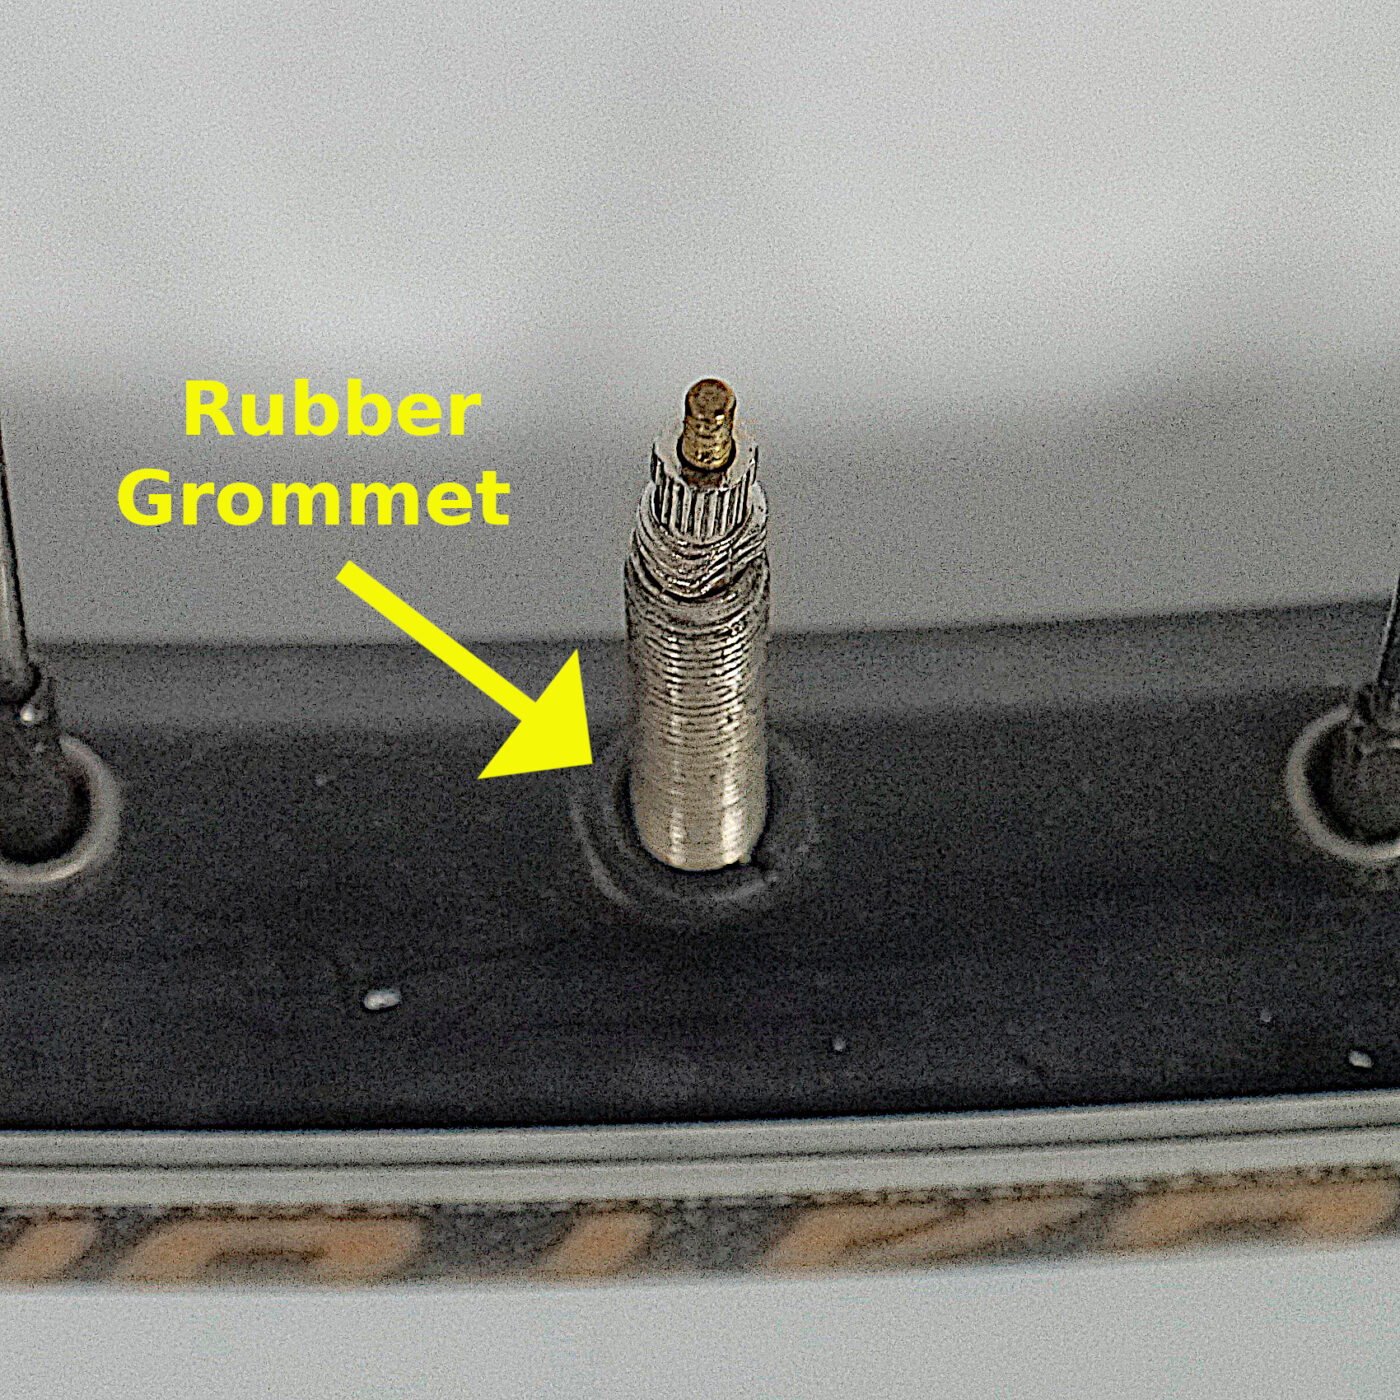 Rubber grommet installed to convert rim drilled for Schrader valves to Presta.